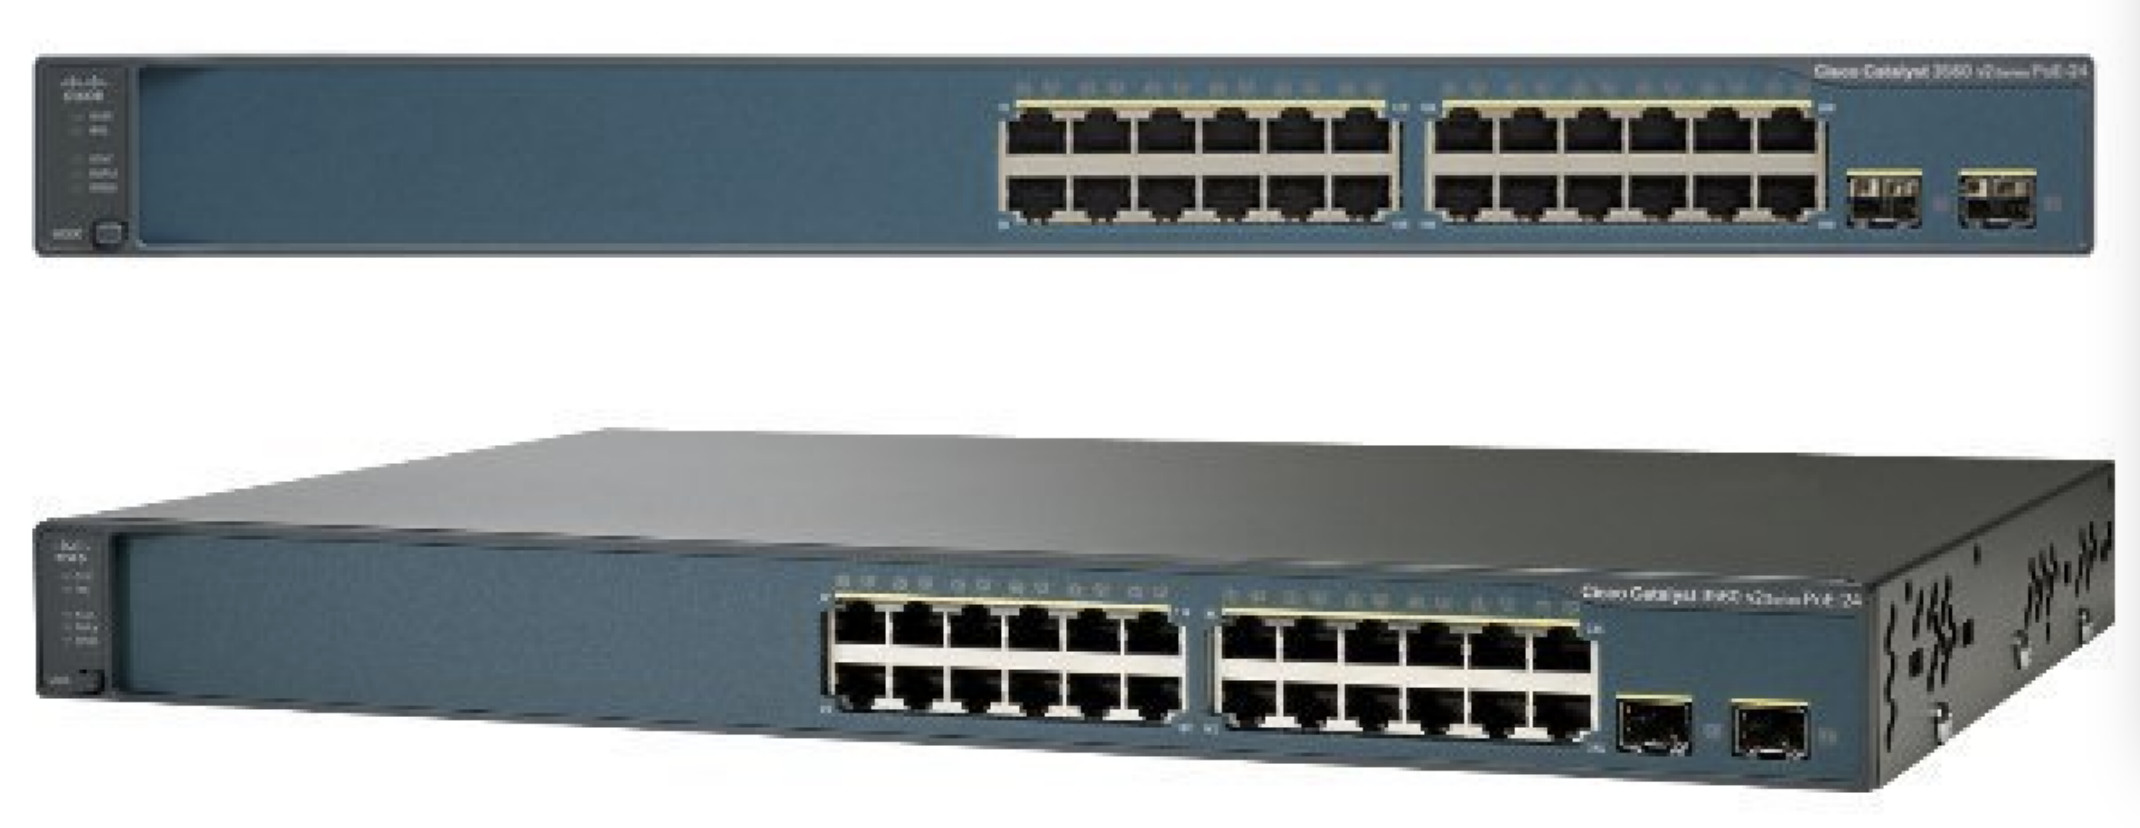 10/100Mbps Cisco 24 Port POE Network Switch Catalyst 3560V2 WSC3560V2